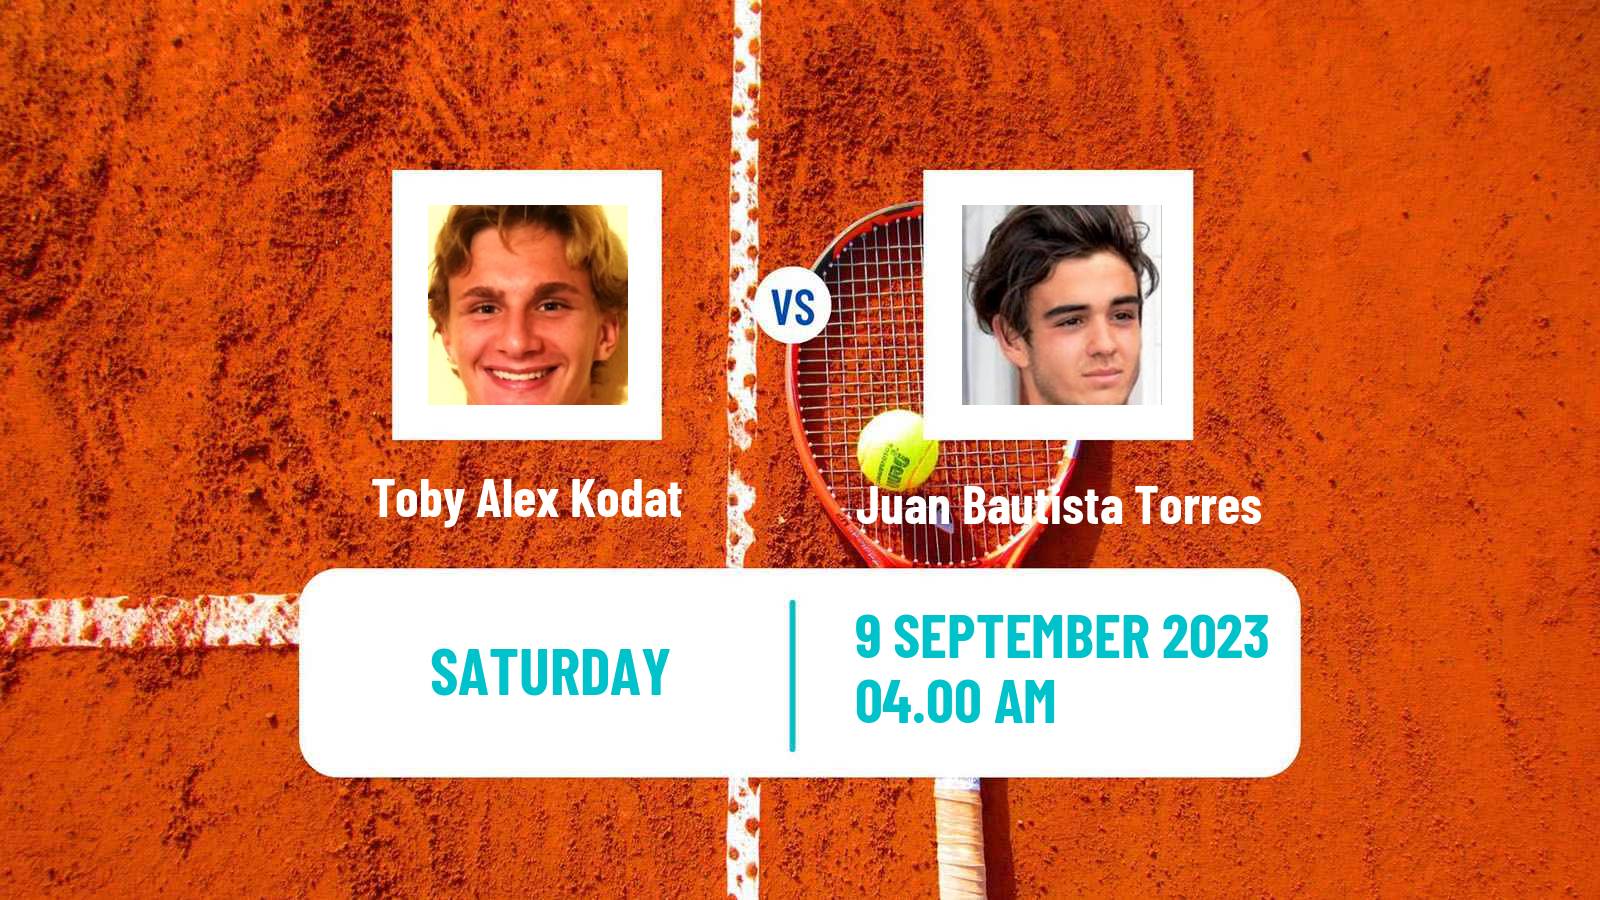 Tennis ITF M25 MarIBOr 2 Men Toby Alex Kodat - Juan Bautista Torres